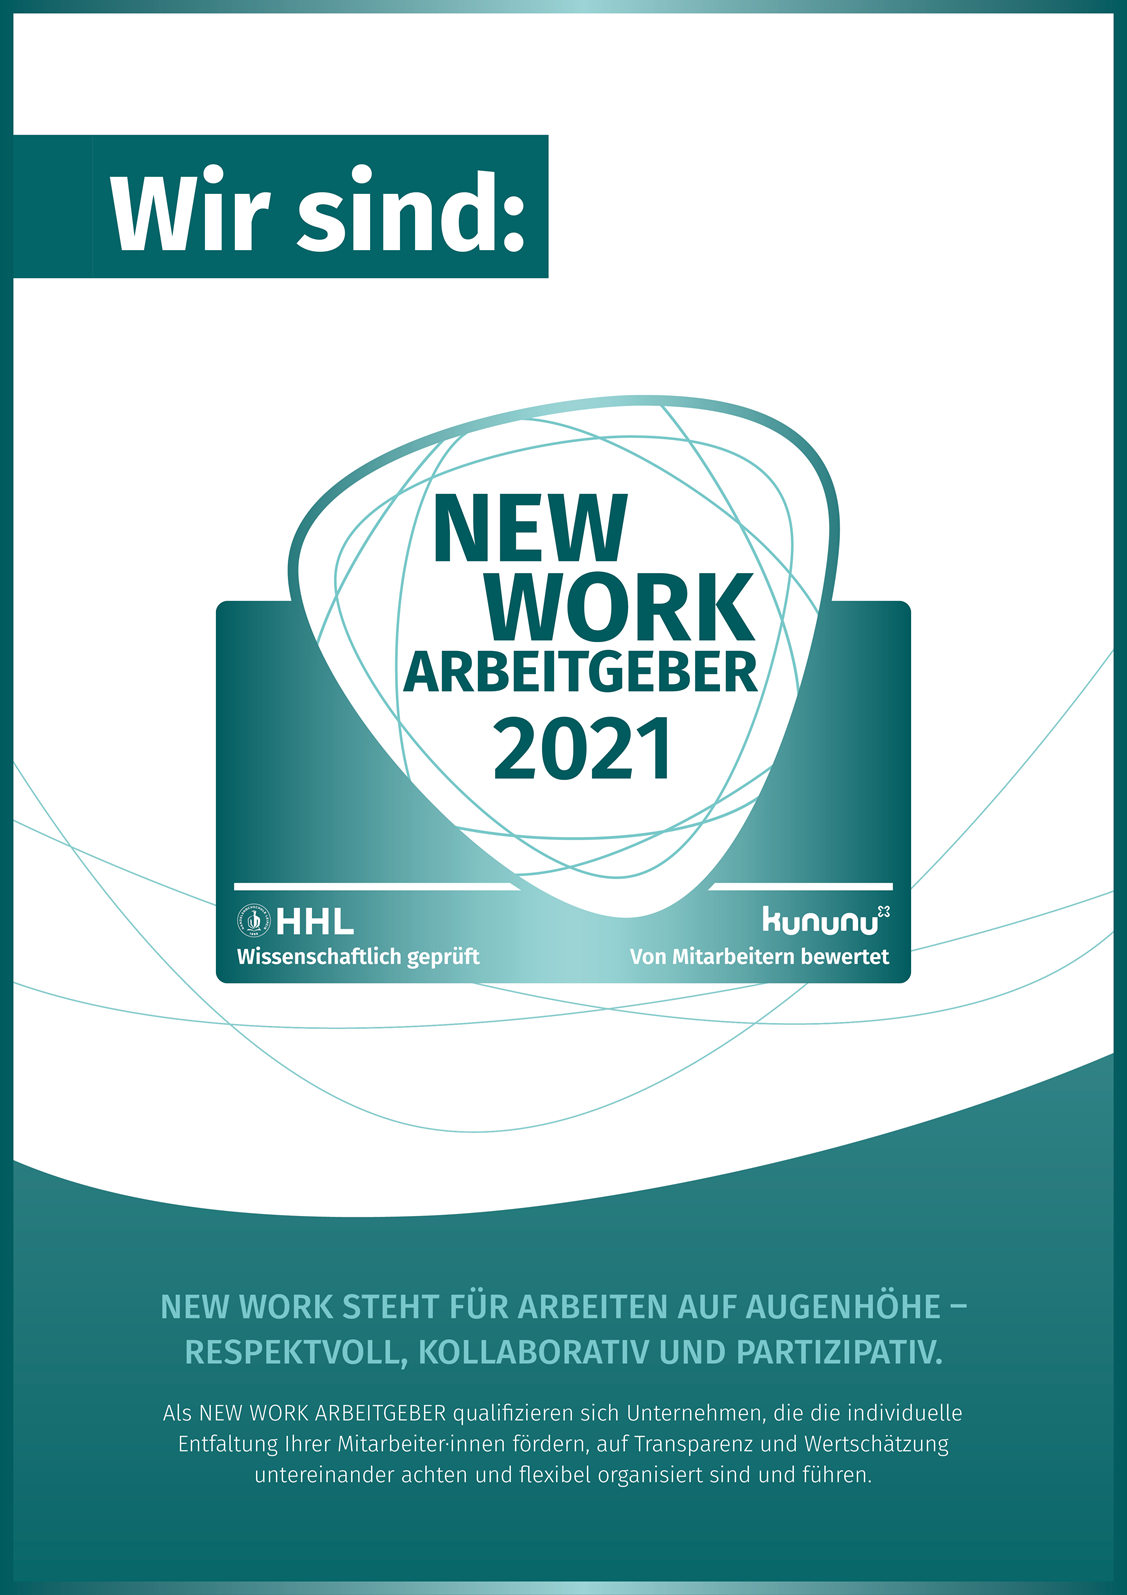 New Work Arbeitgeber Urkunde - Dr. Kraus & Partner